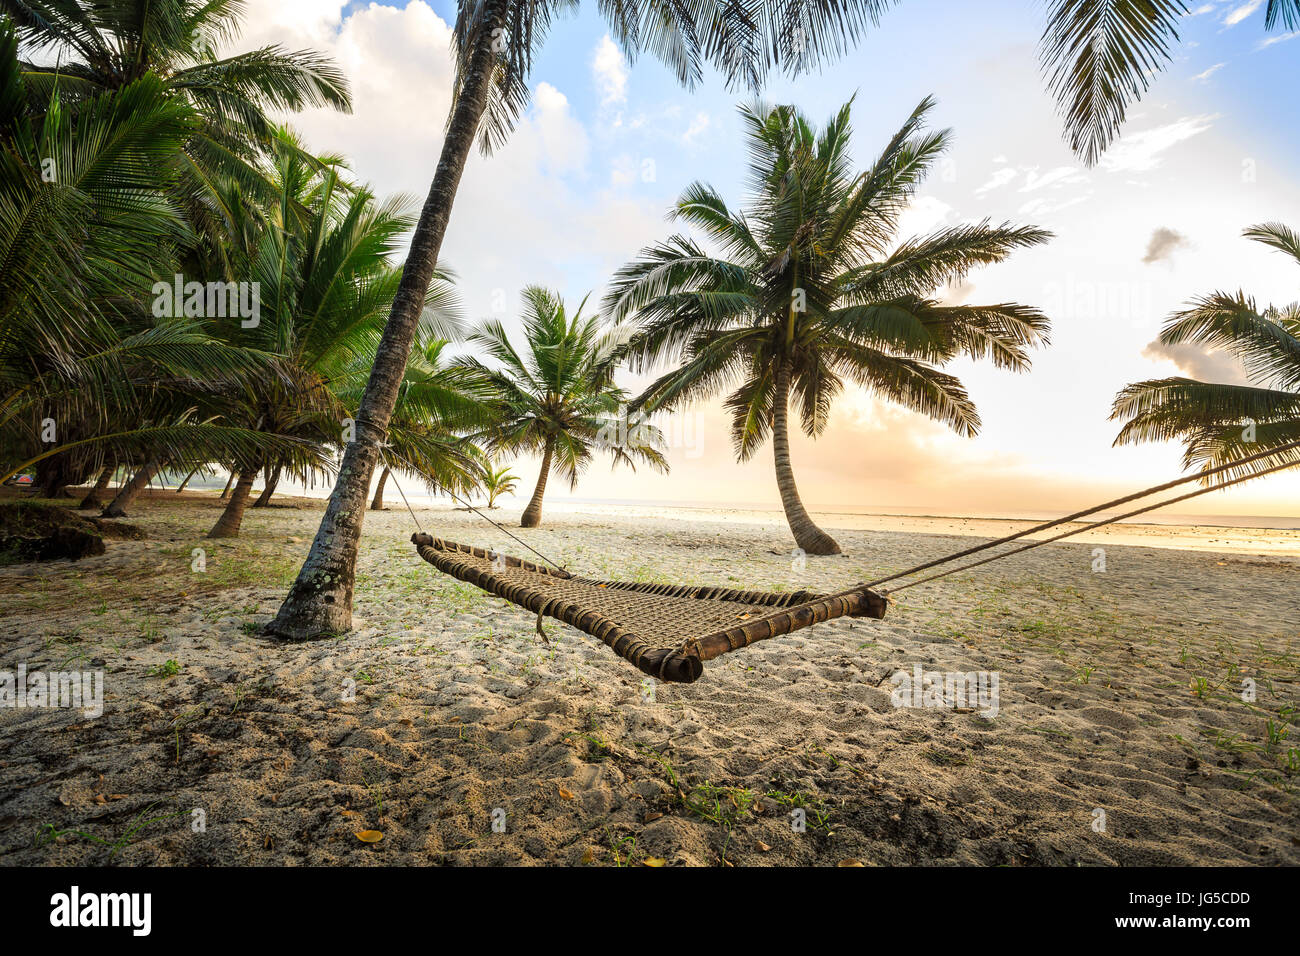 Hammock between palms on sandy beach, Diani, Kenya Stock Photo